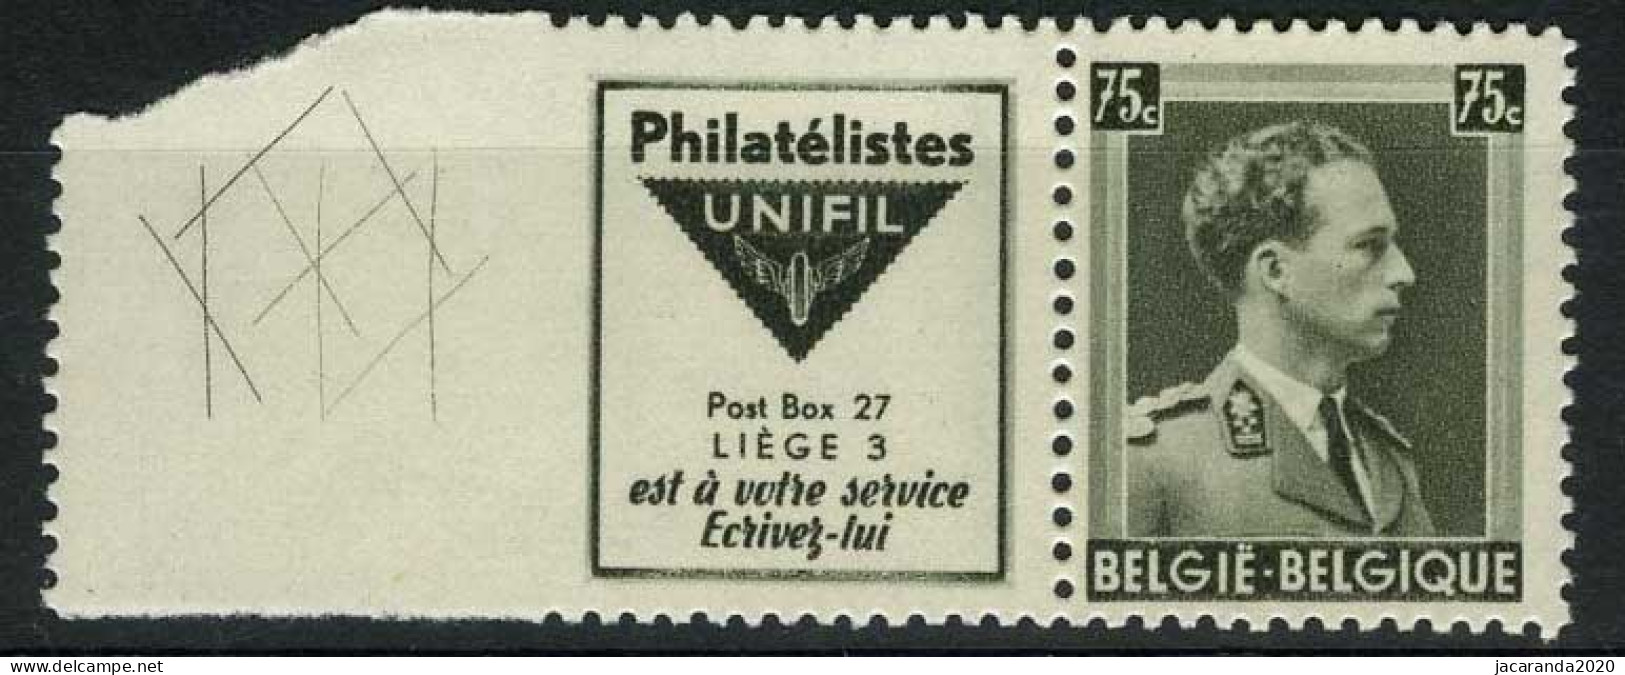 België PU119 ** - Gekruiste Lijnen In Rand - Philatélistes Unifil - Postfris